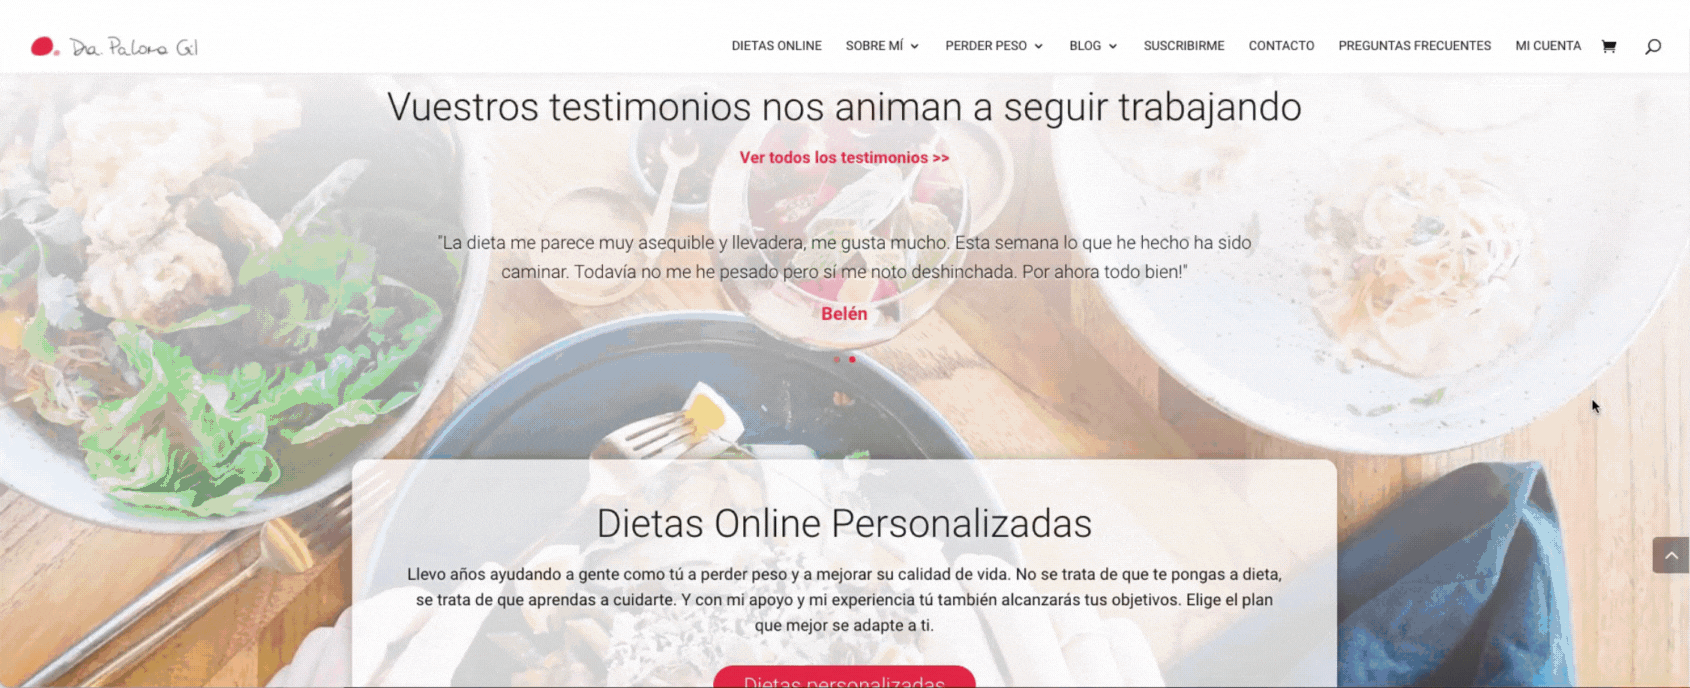 Web Paloma gil, nueva marca